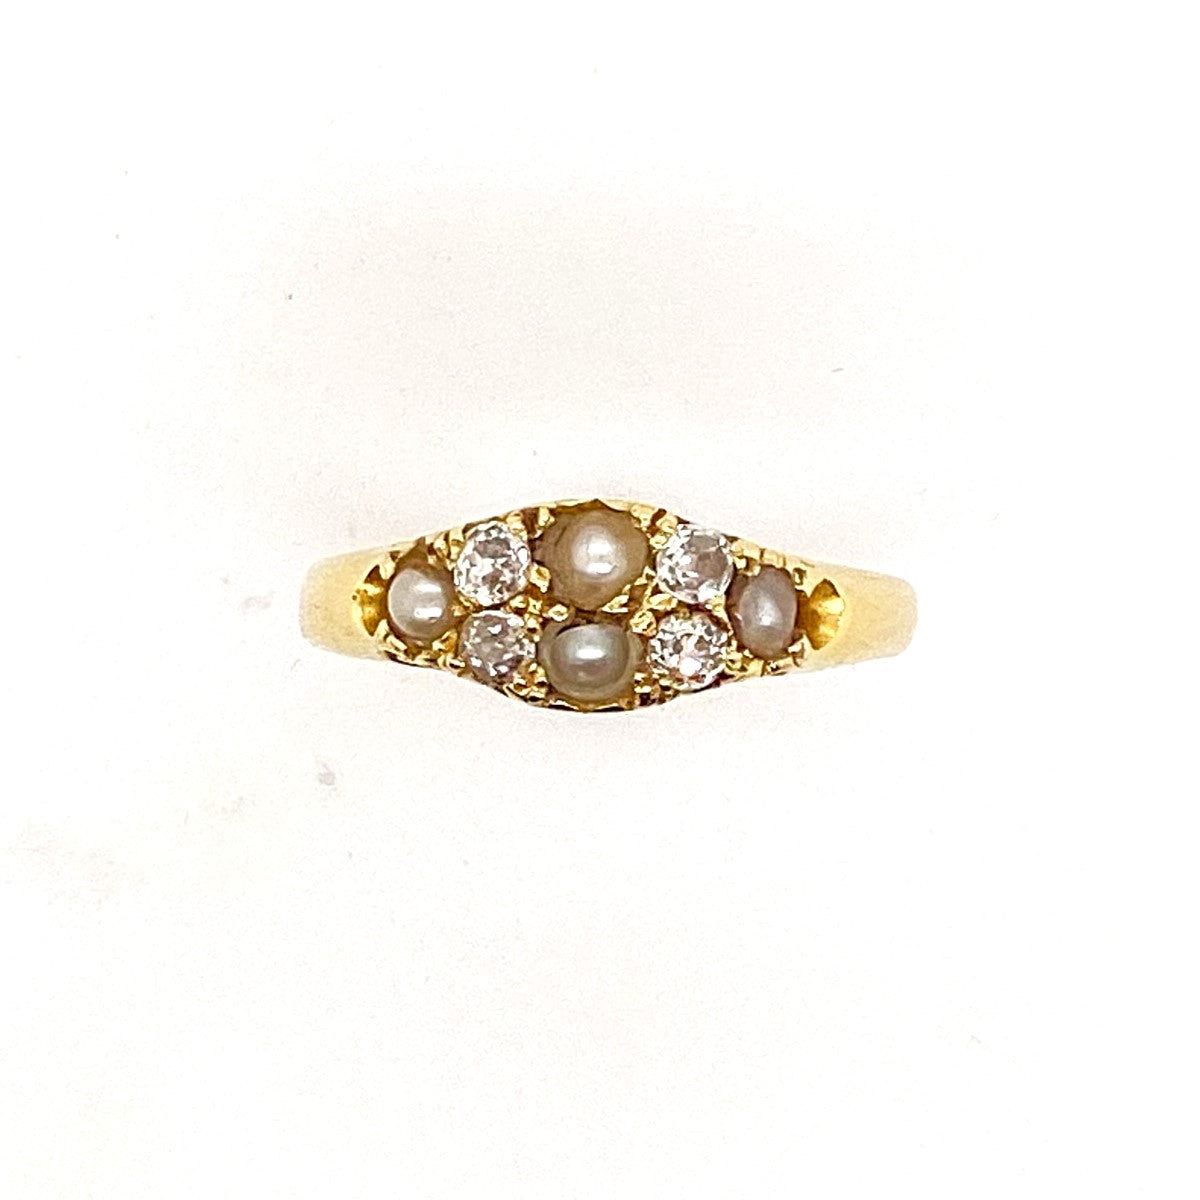 1883 antique diamond ring